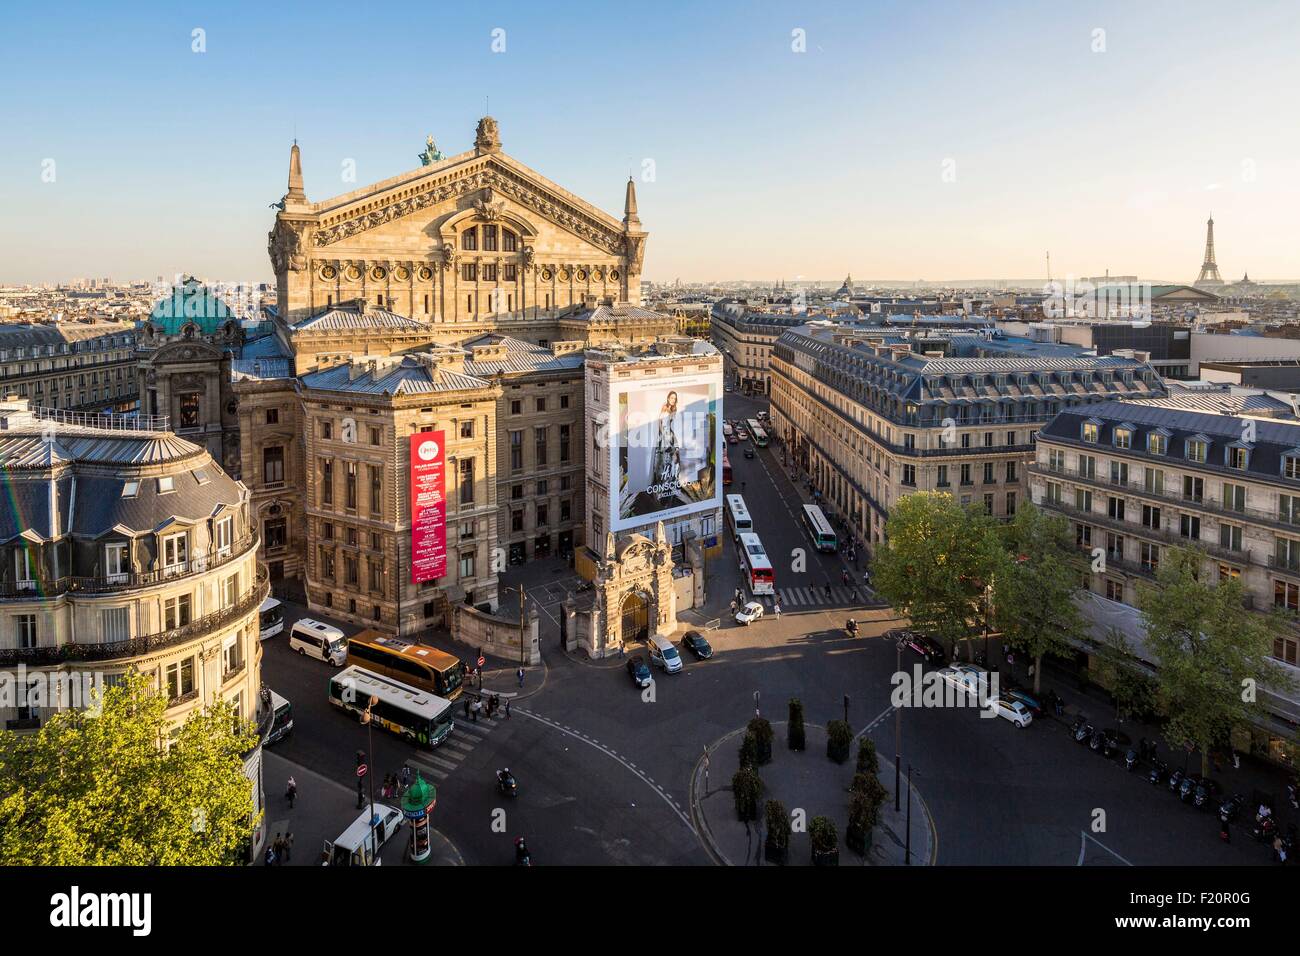 France, Paris, Opera Garnier Banque D'Images